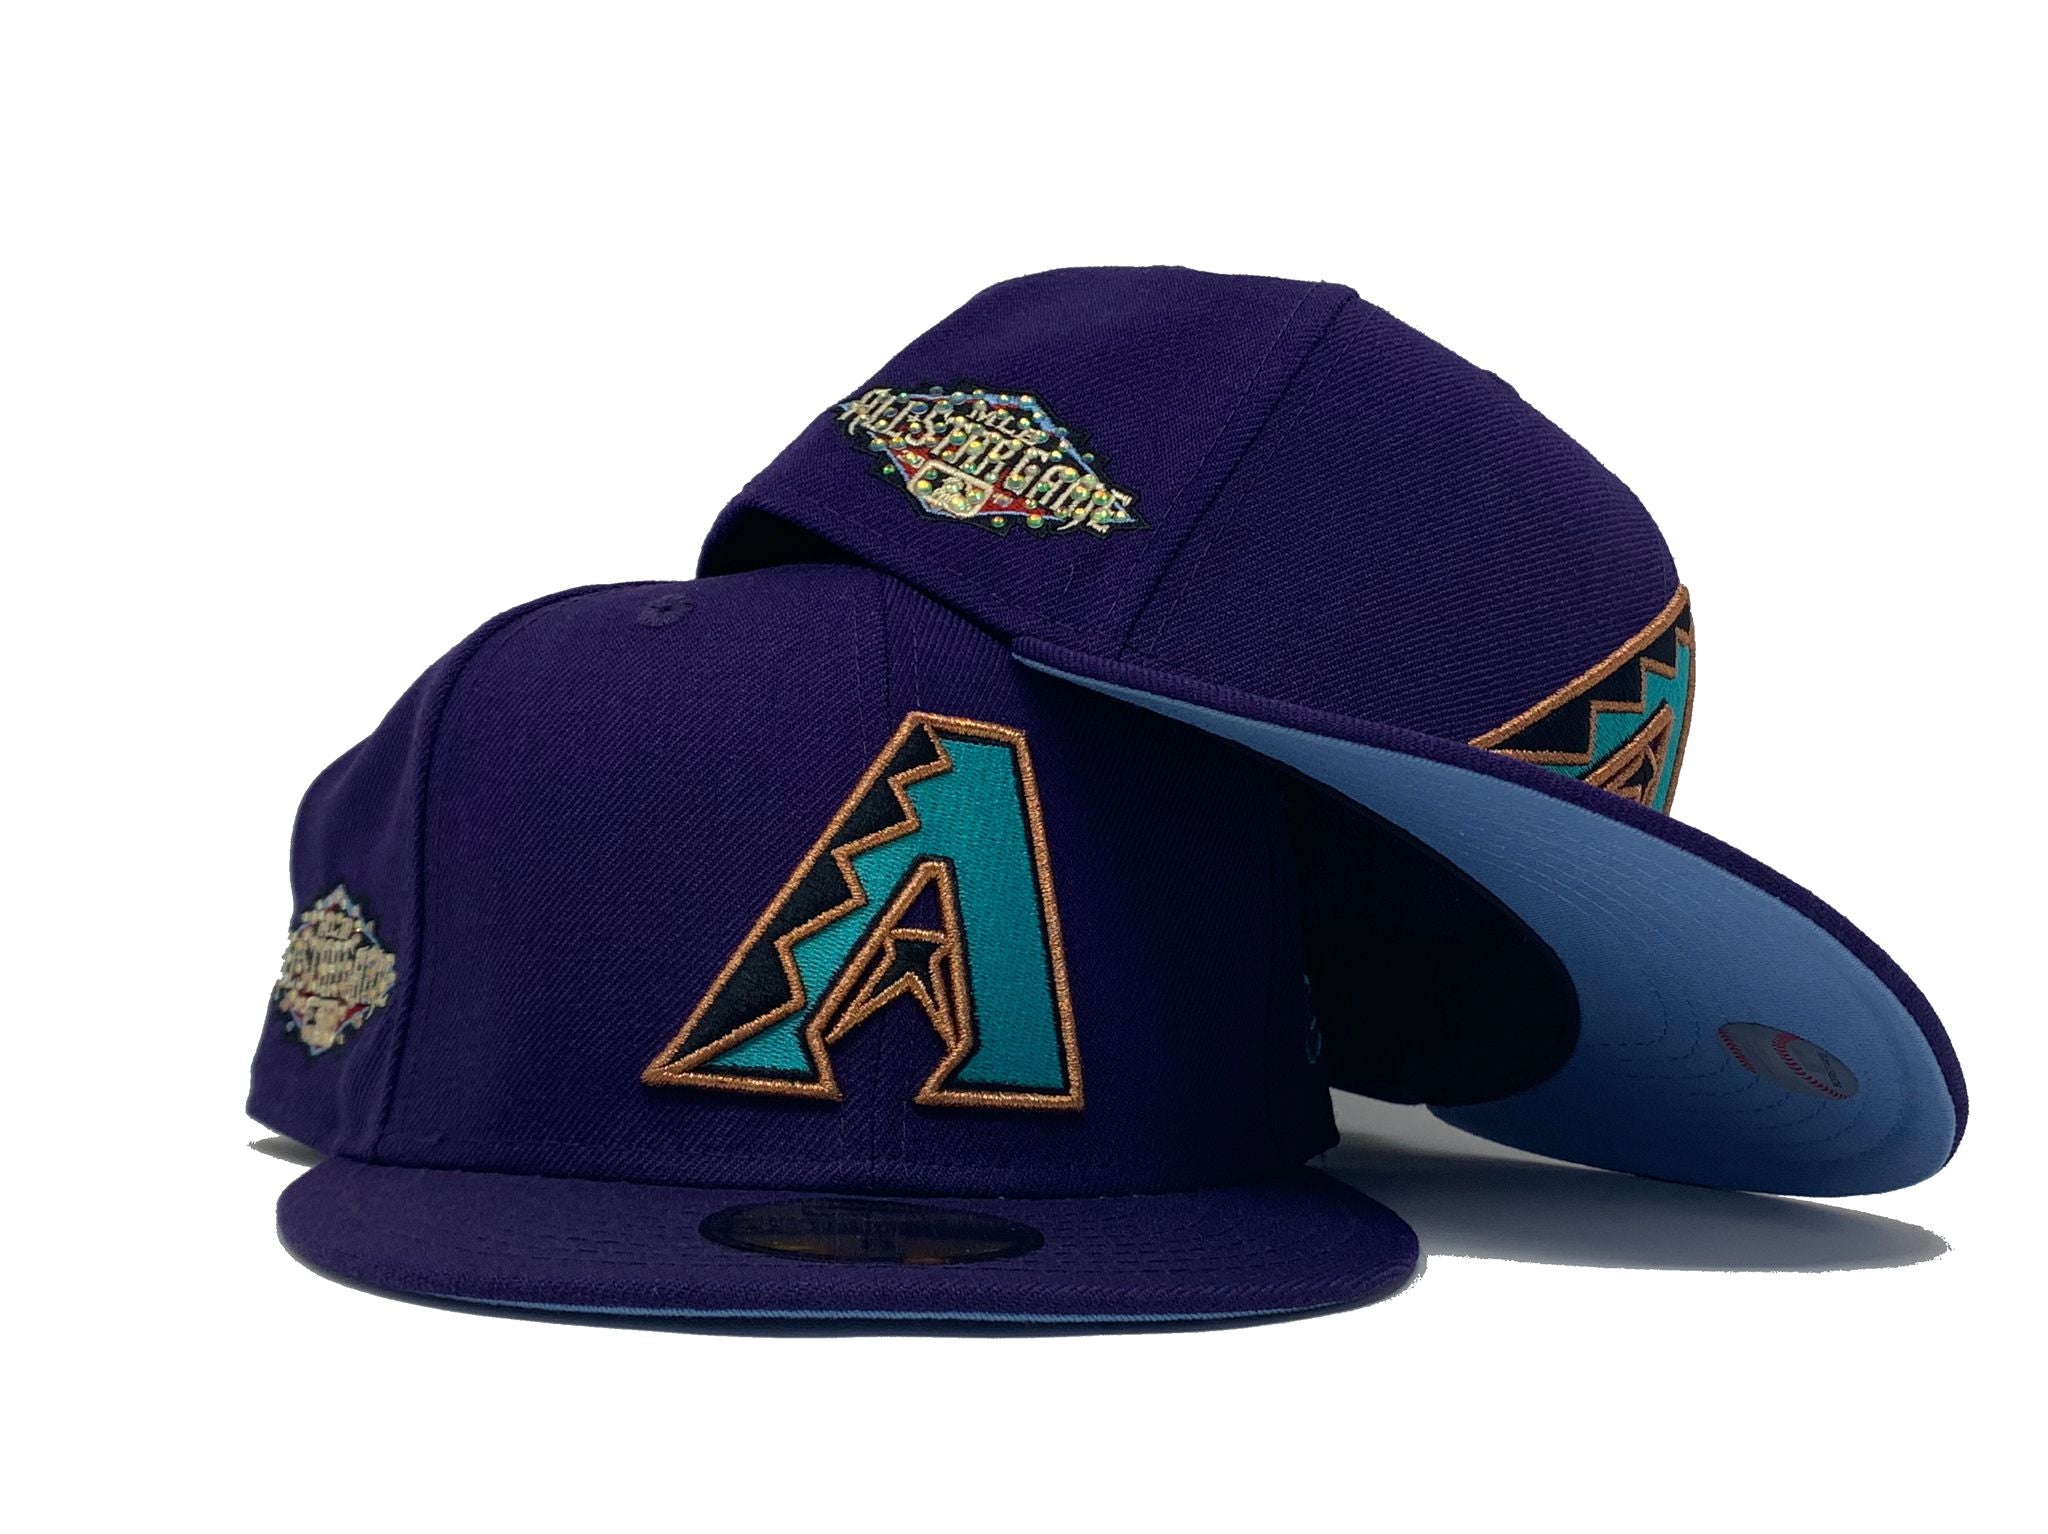 New Era Arizona Diamondbacks T-Dot 2011 All-Star Game Patch Snakehead Hat Club Exclusive 59FIFTY Fitted Hat Purple/Black